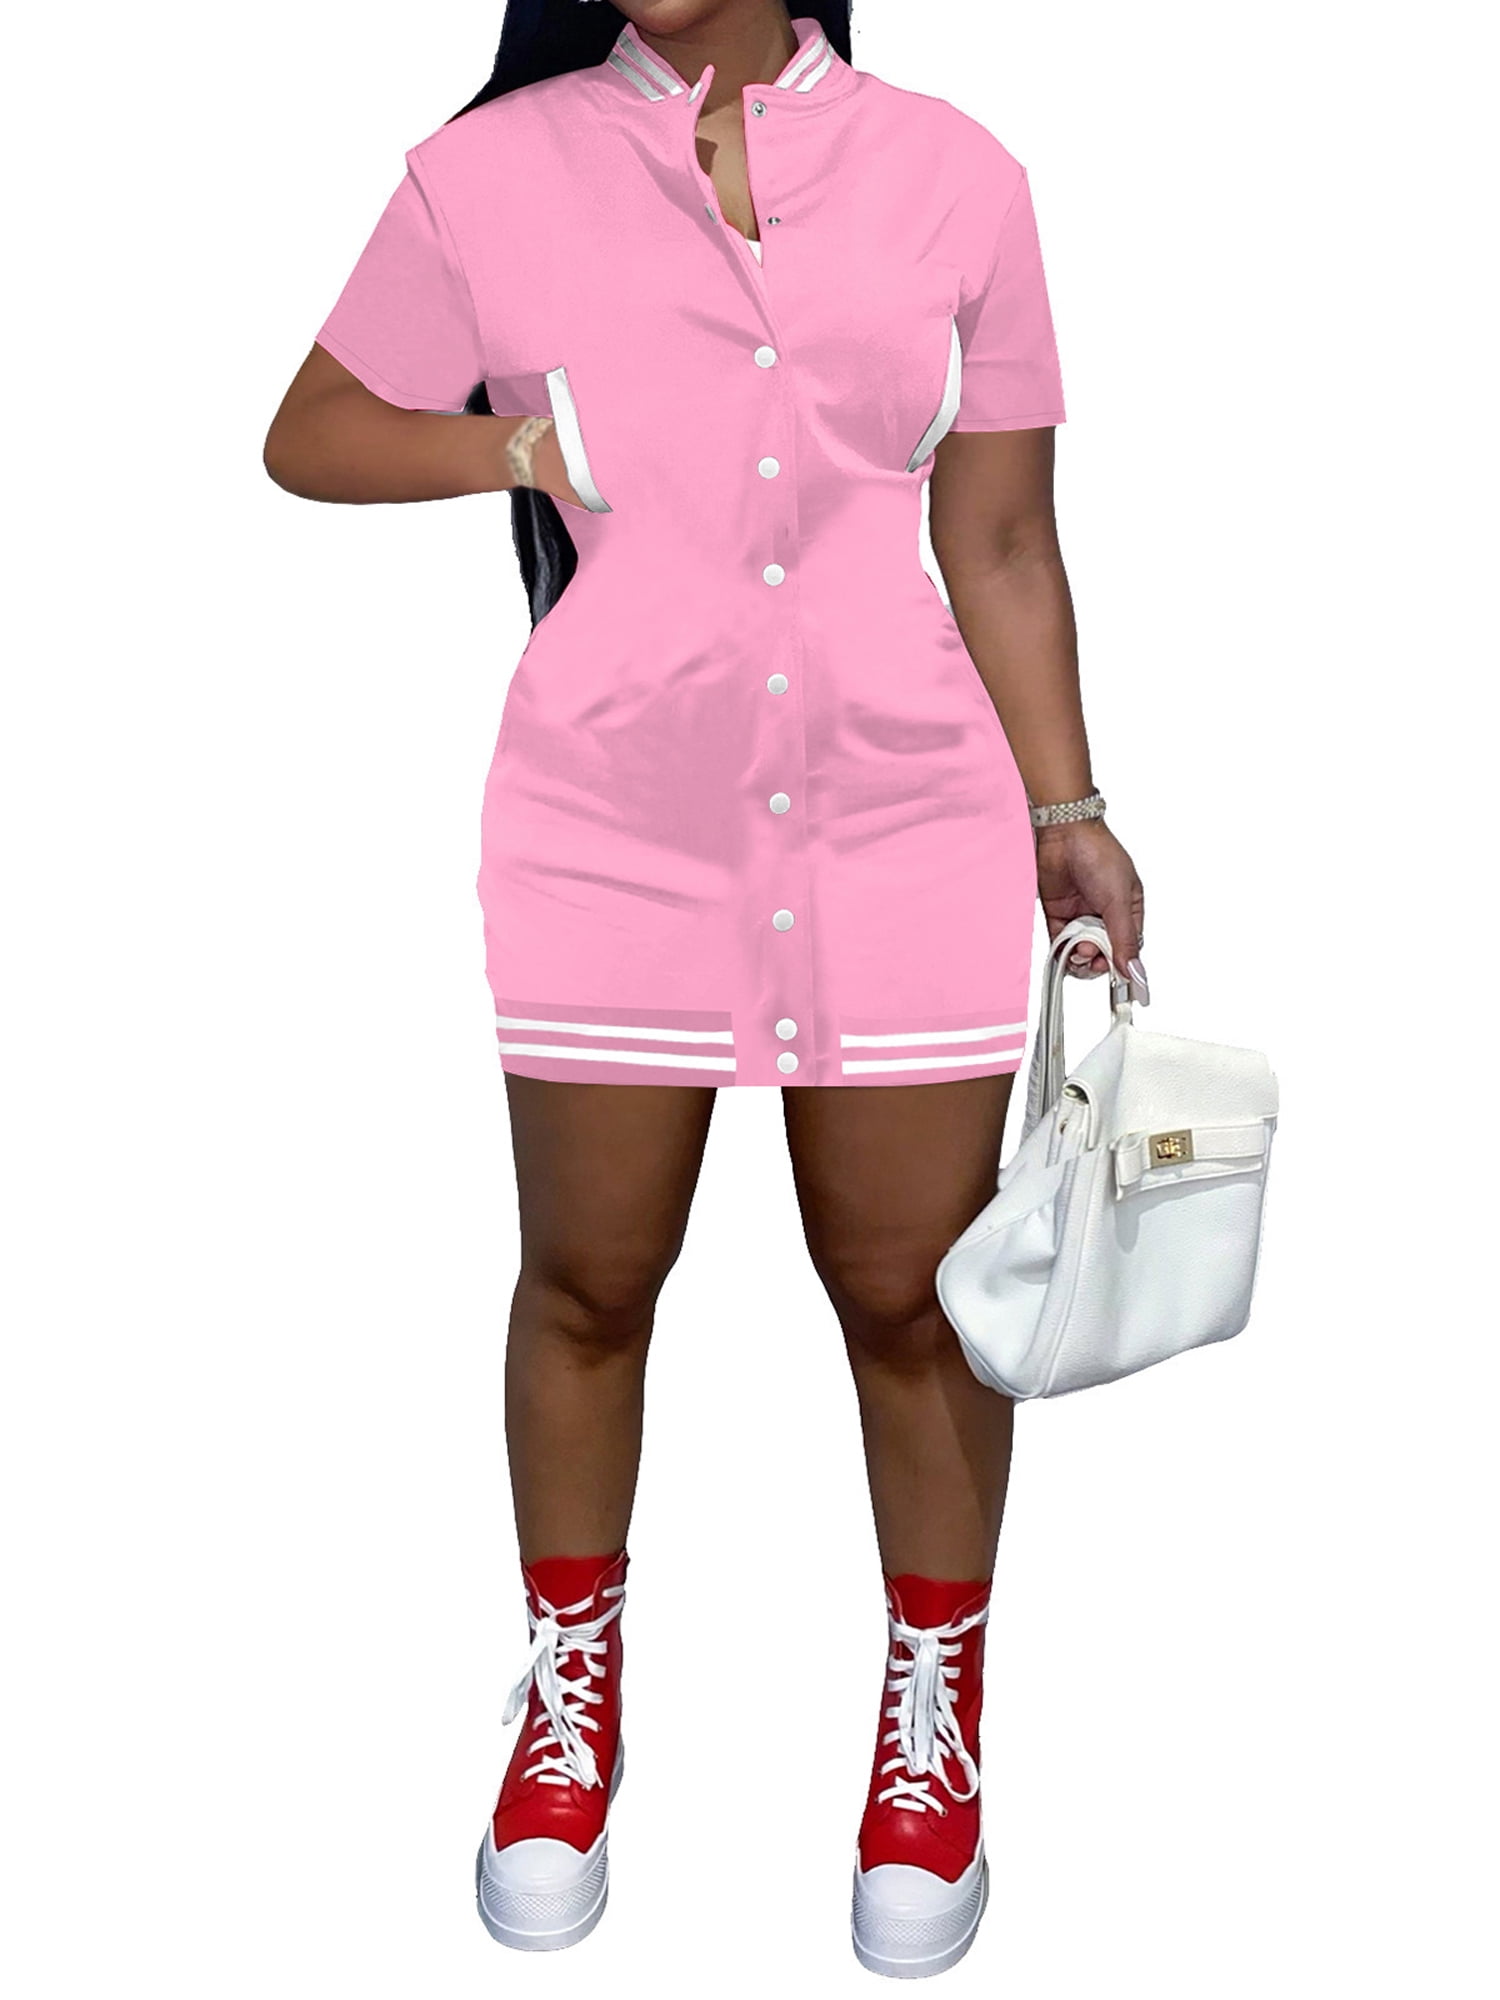 Kayotuas Womens Casual Sports Baseball Varsity Jacket Dress Short